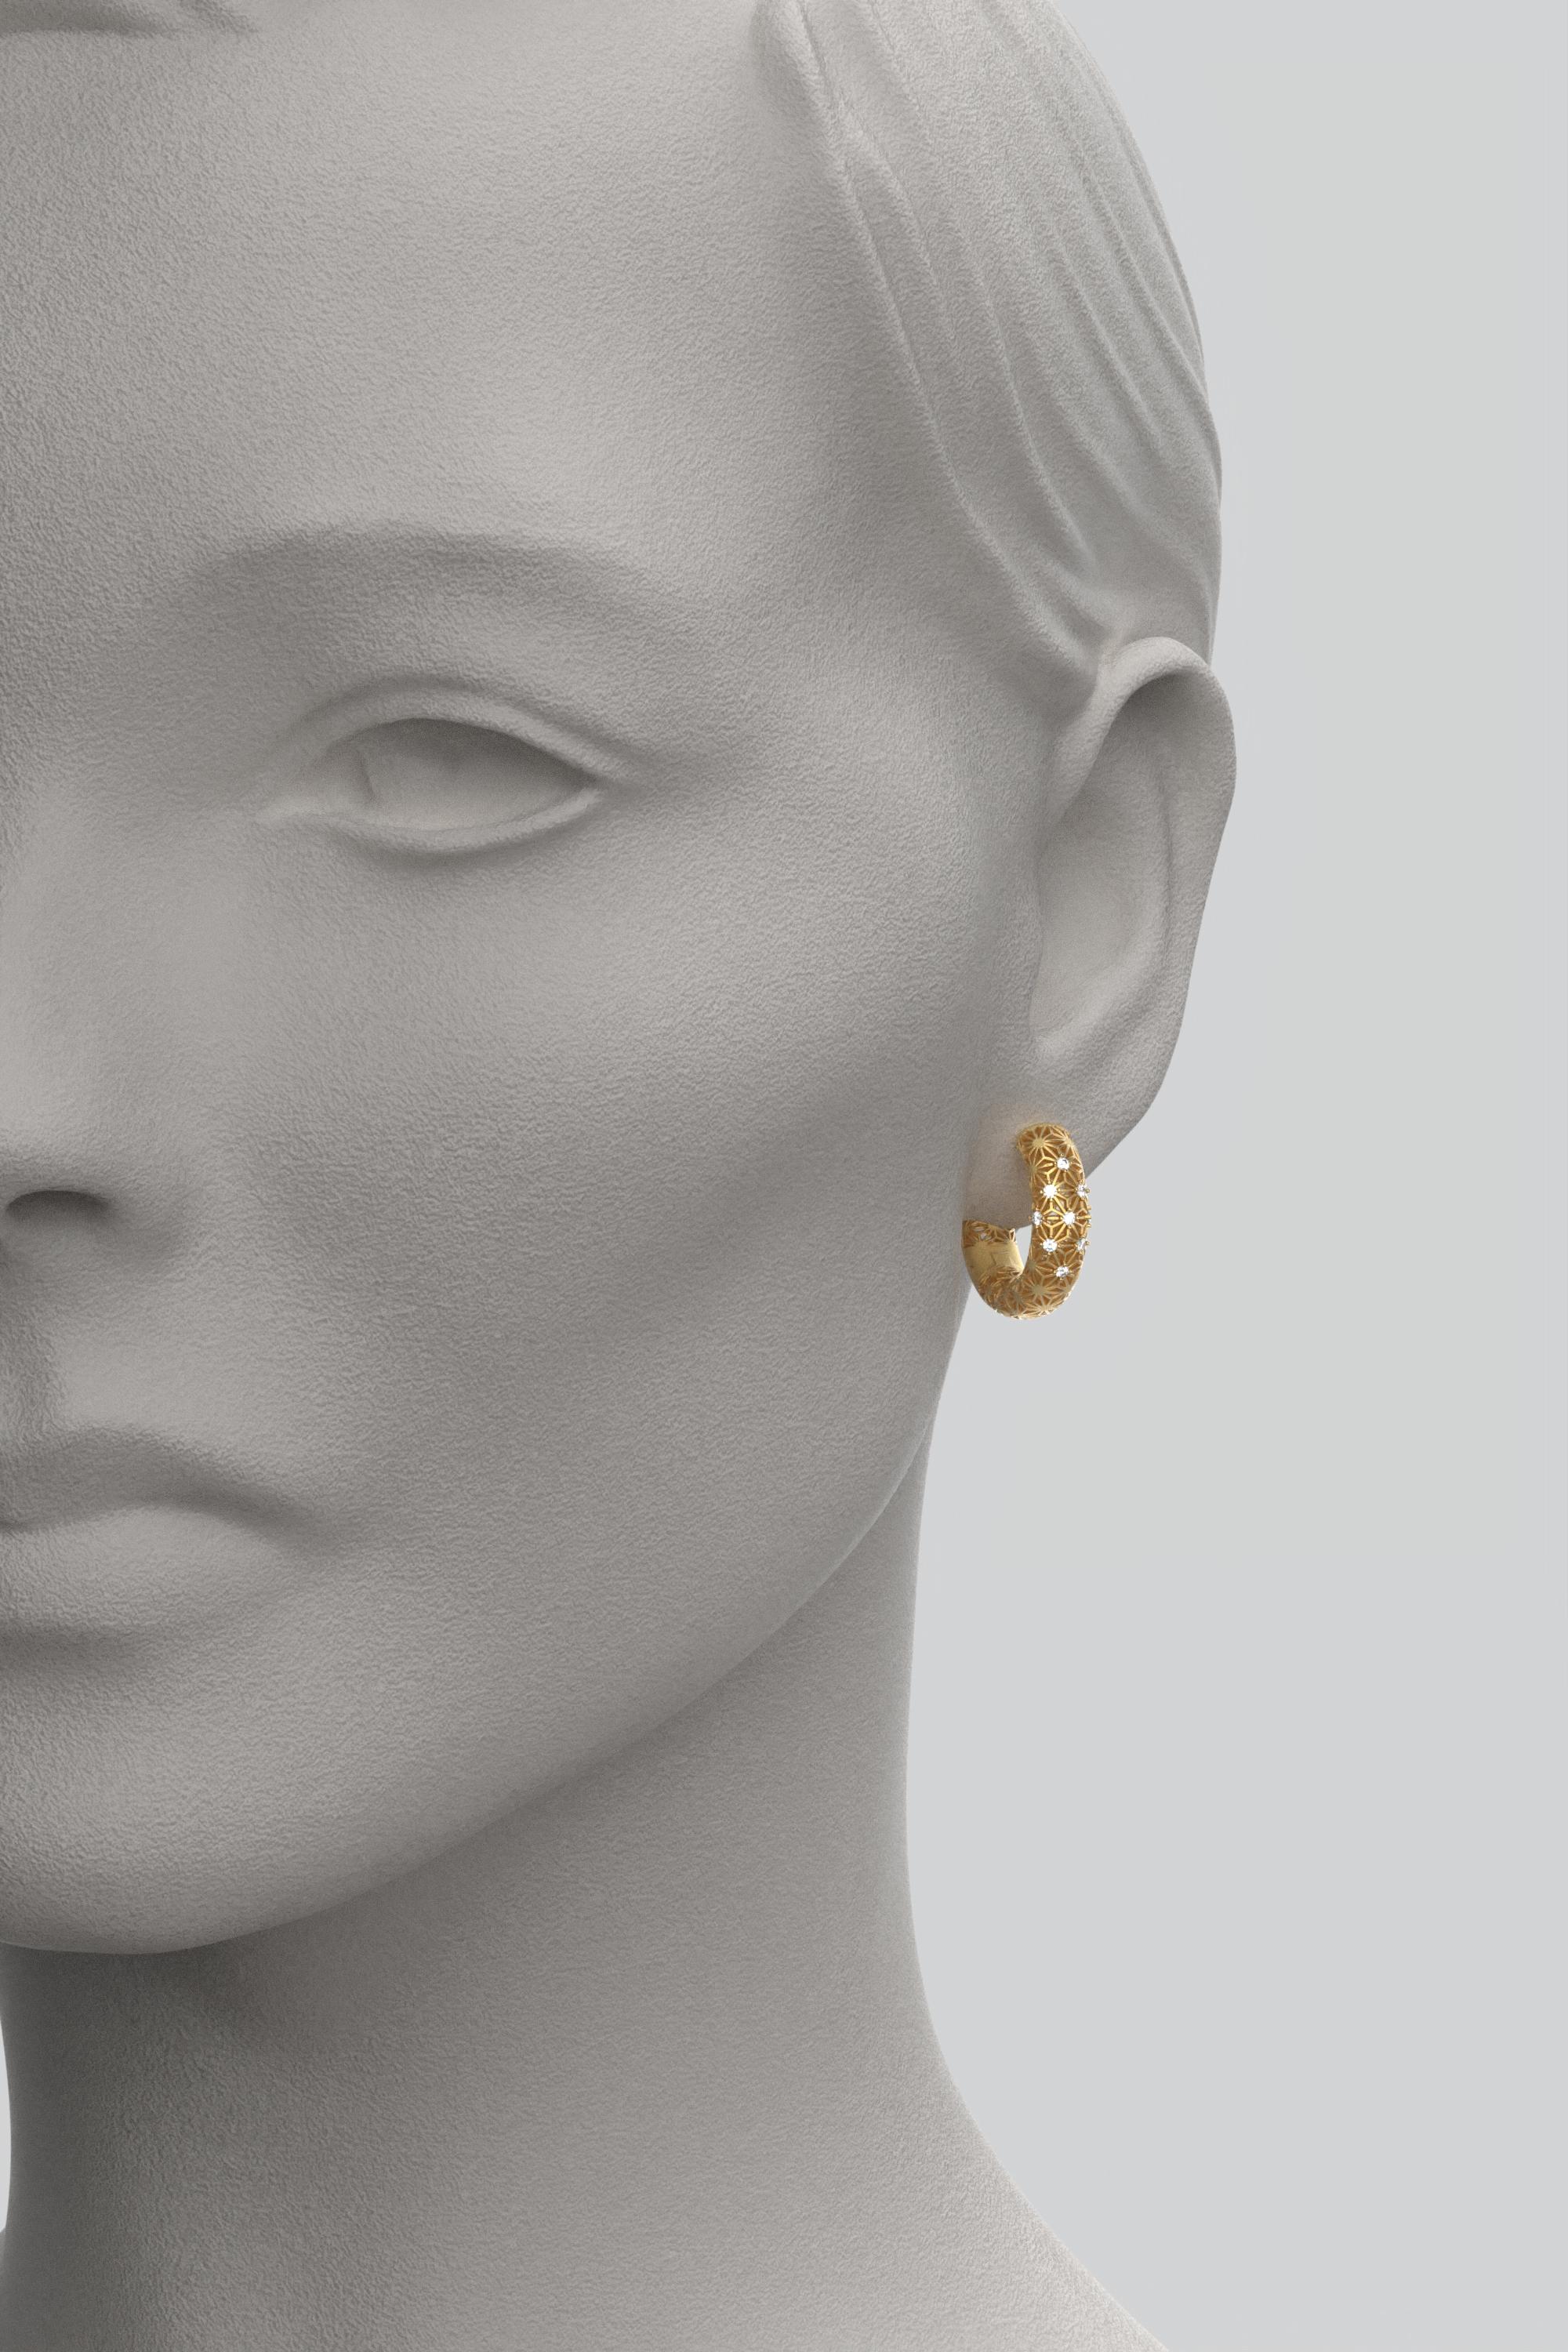 Italian 18K Gold Diamond Hoop Earrings Sashiko Pattern - Oltremare Gioielli In New Condition For Sale In Camisano Vicentino, VI